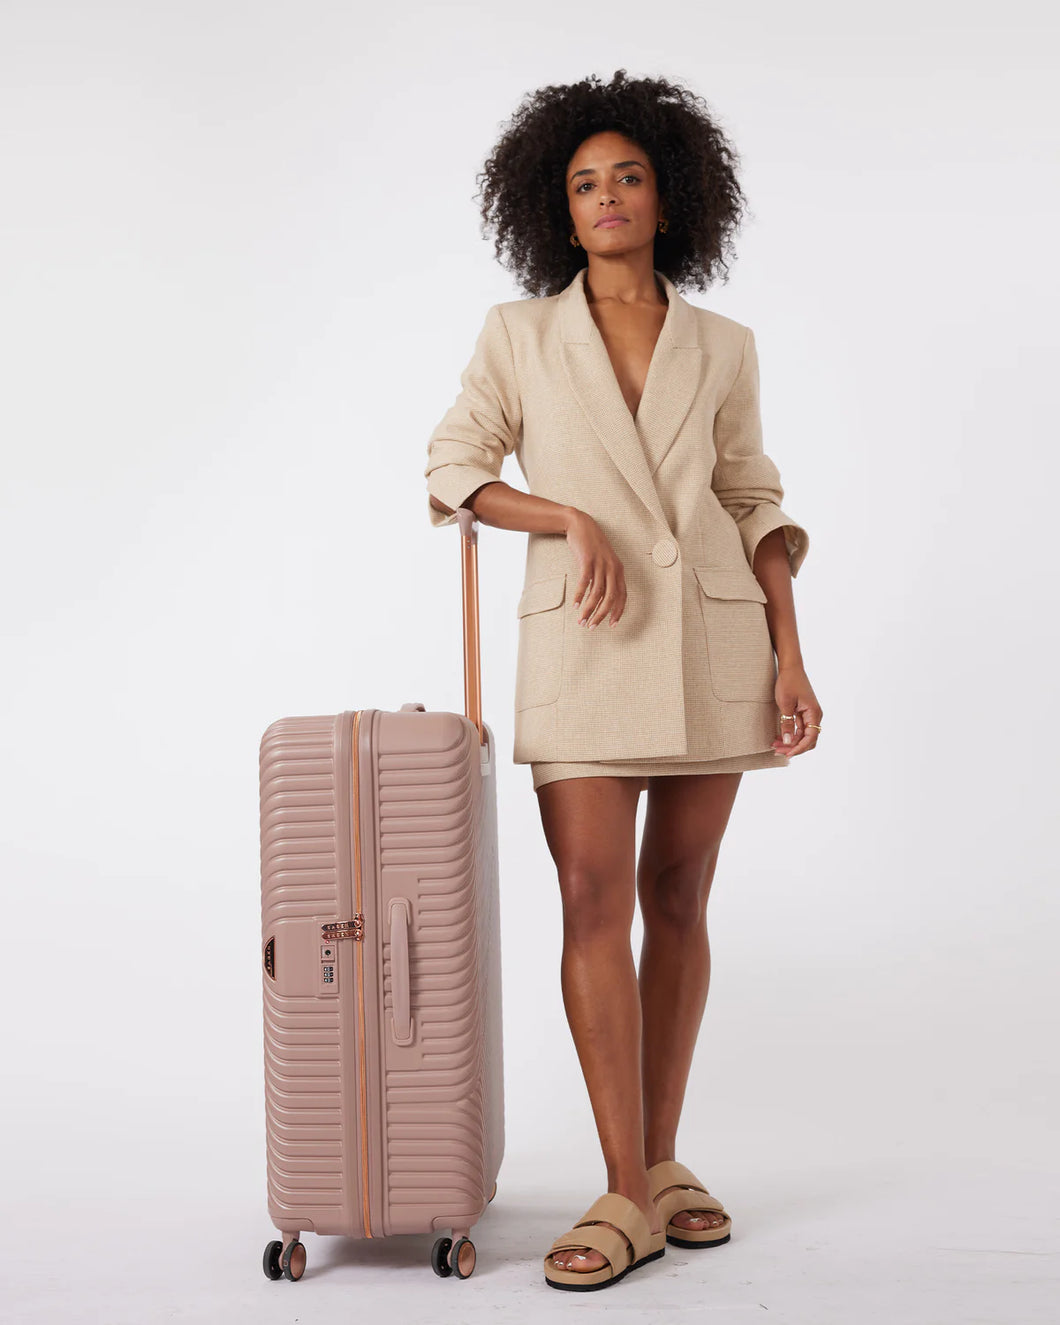 Saben Large Suitcase Luggage Bag - Dusky Rose  Hyde Boutique   